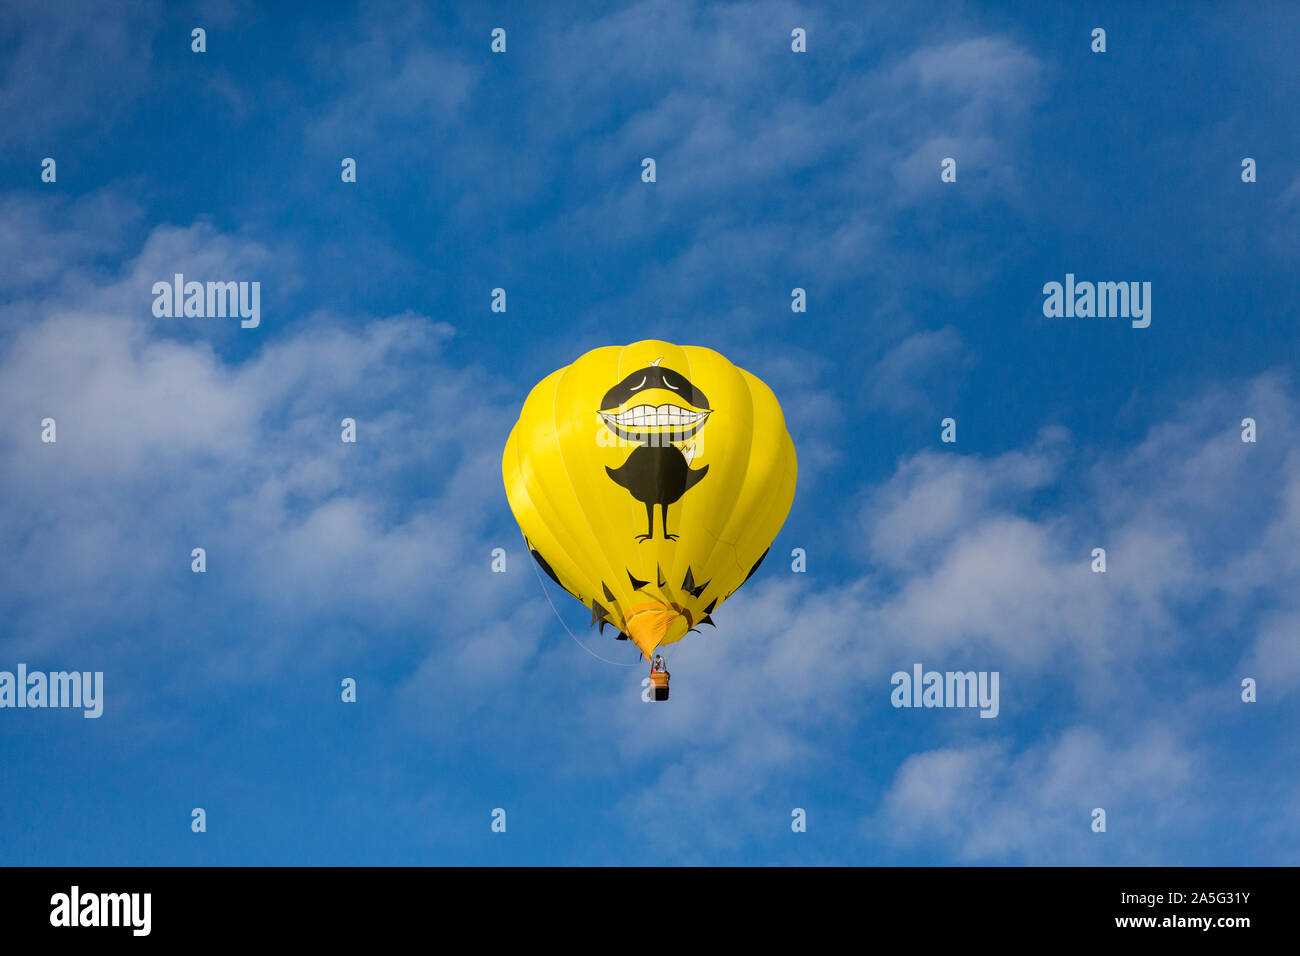 Großer schwarzer Vogel Ballon Stockfotografie - Alamy